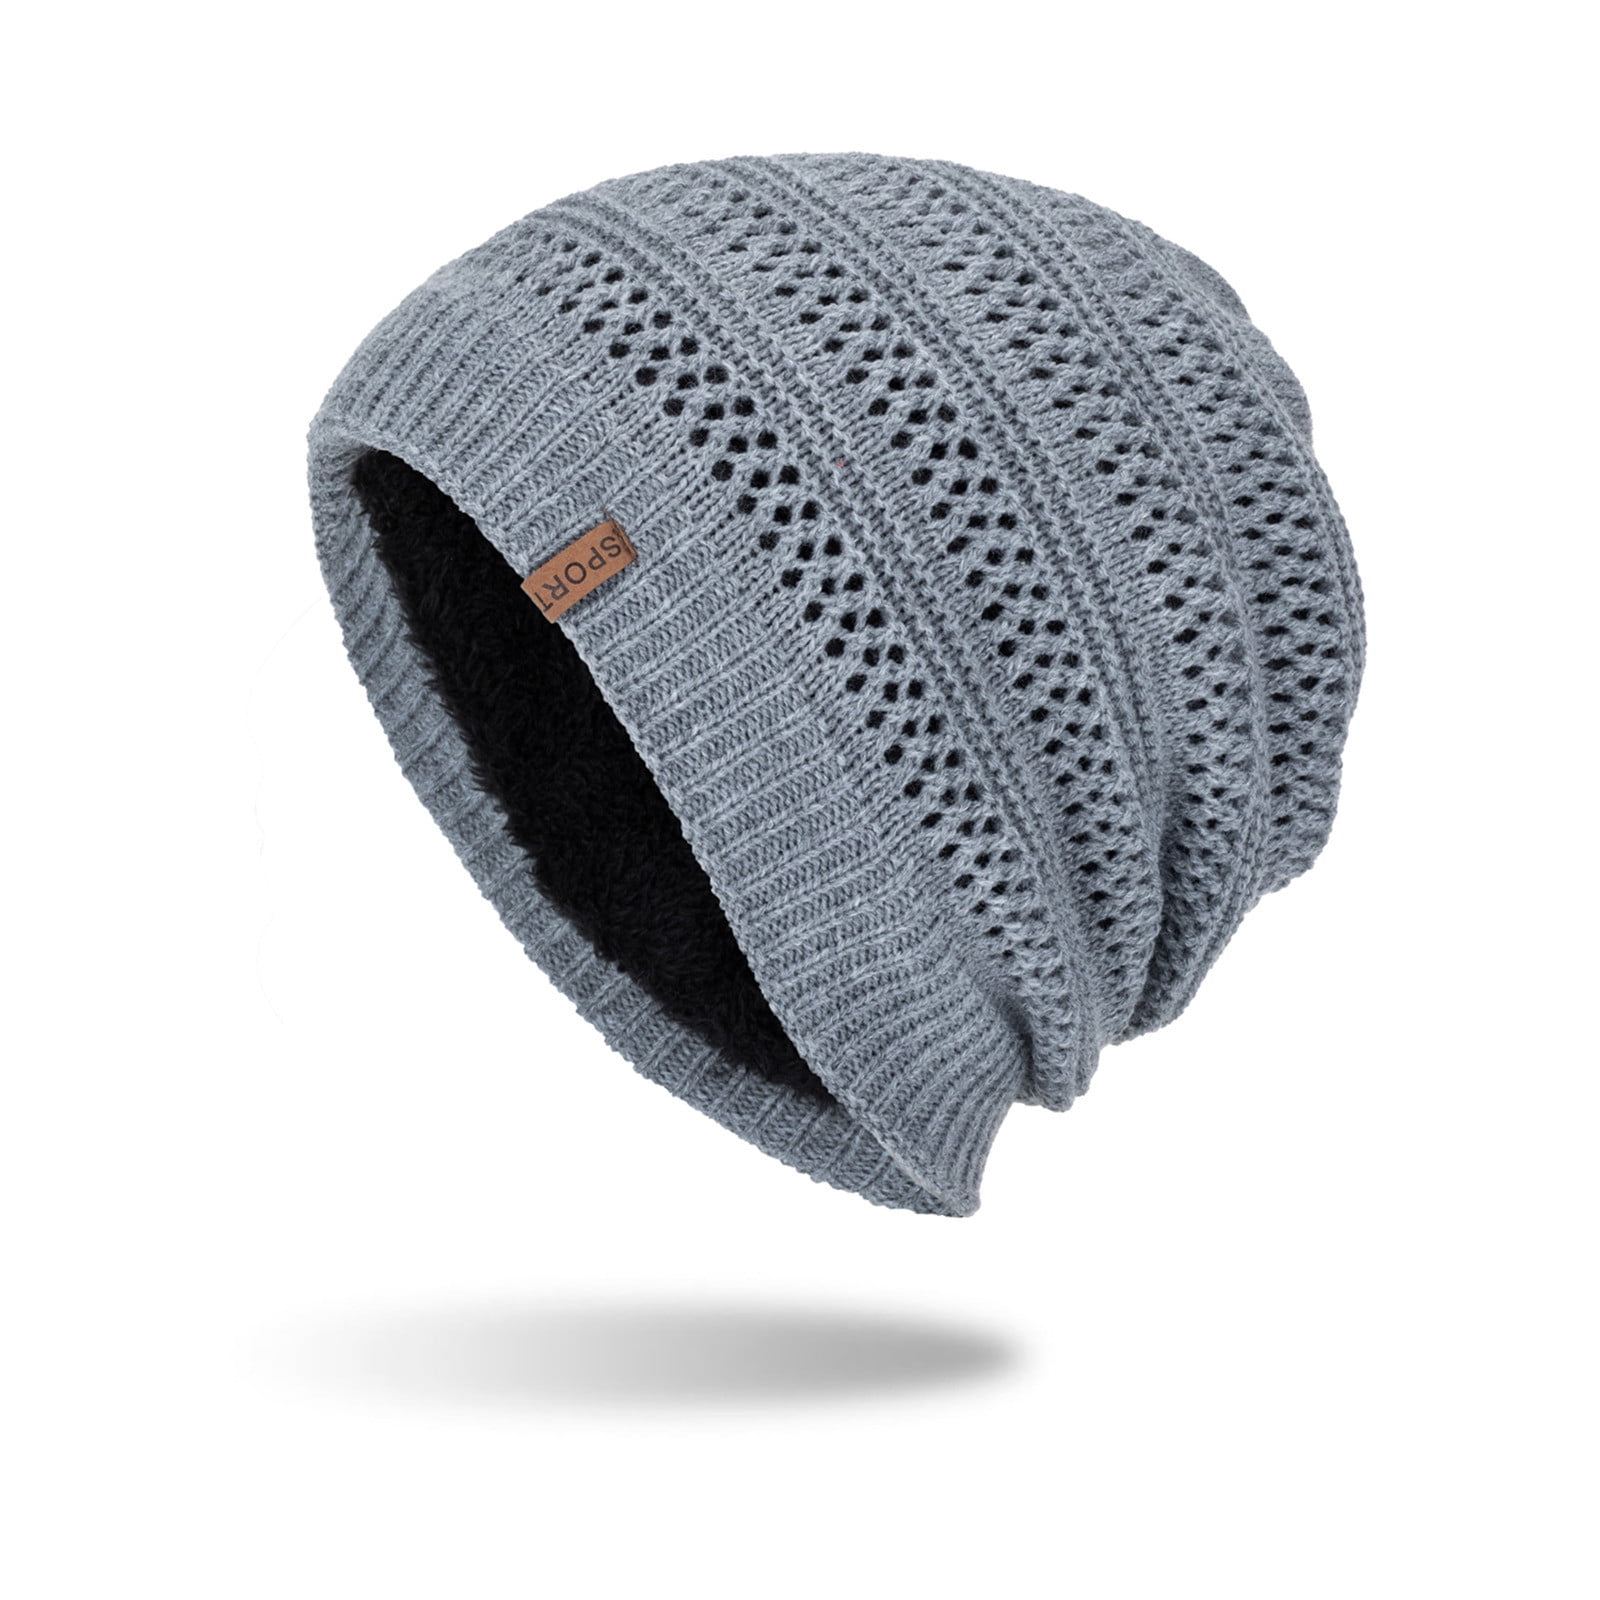 New Unisex Knit Cap Hedging Head Hat Beanie Cap Warm Outdoor Hat Winter Casual Best Gift